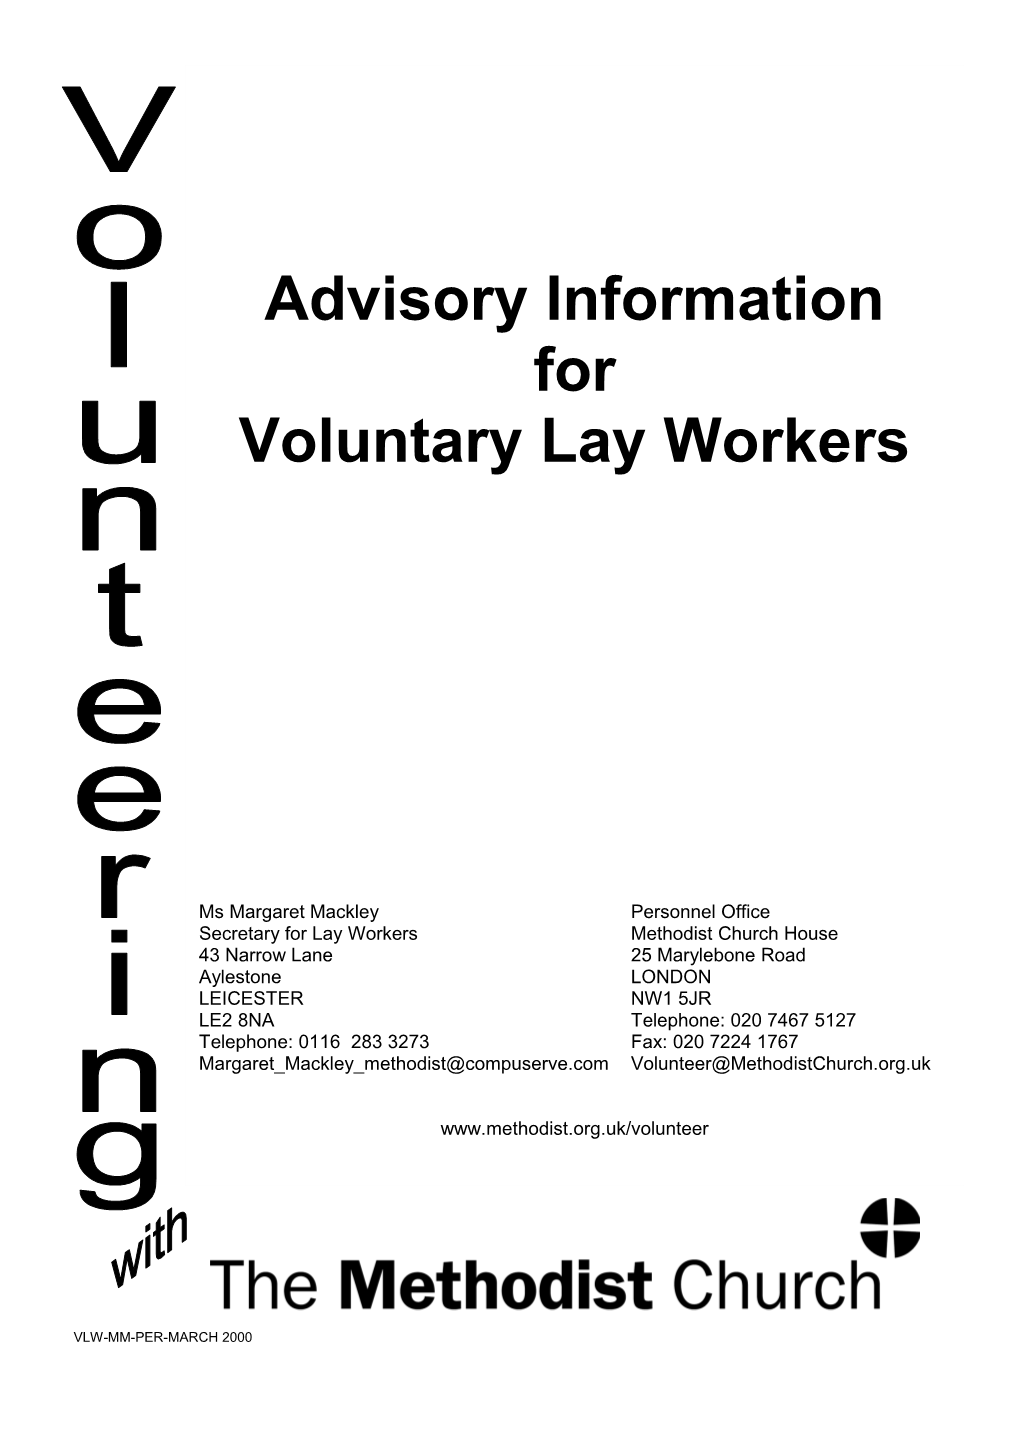 Voluntary Lay Worker Advisory Information